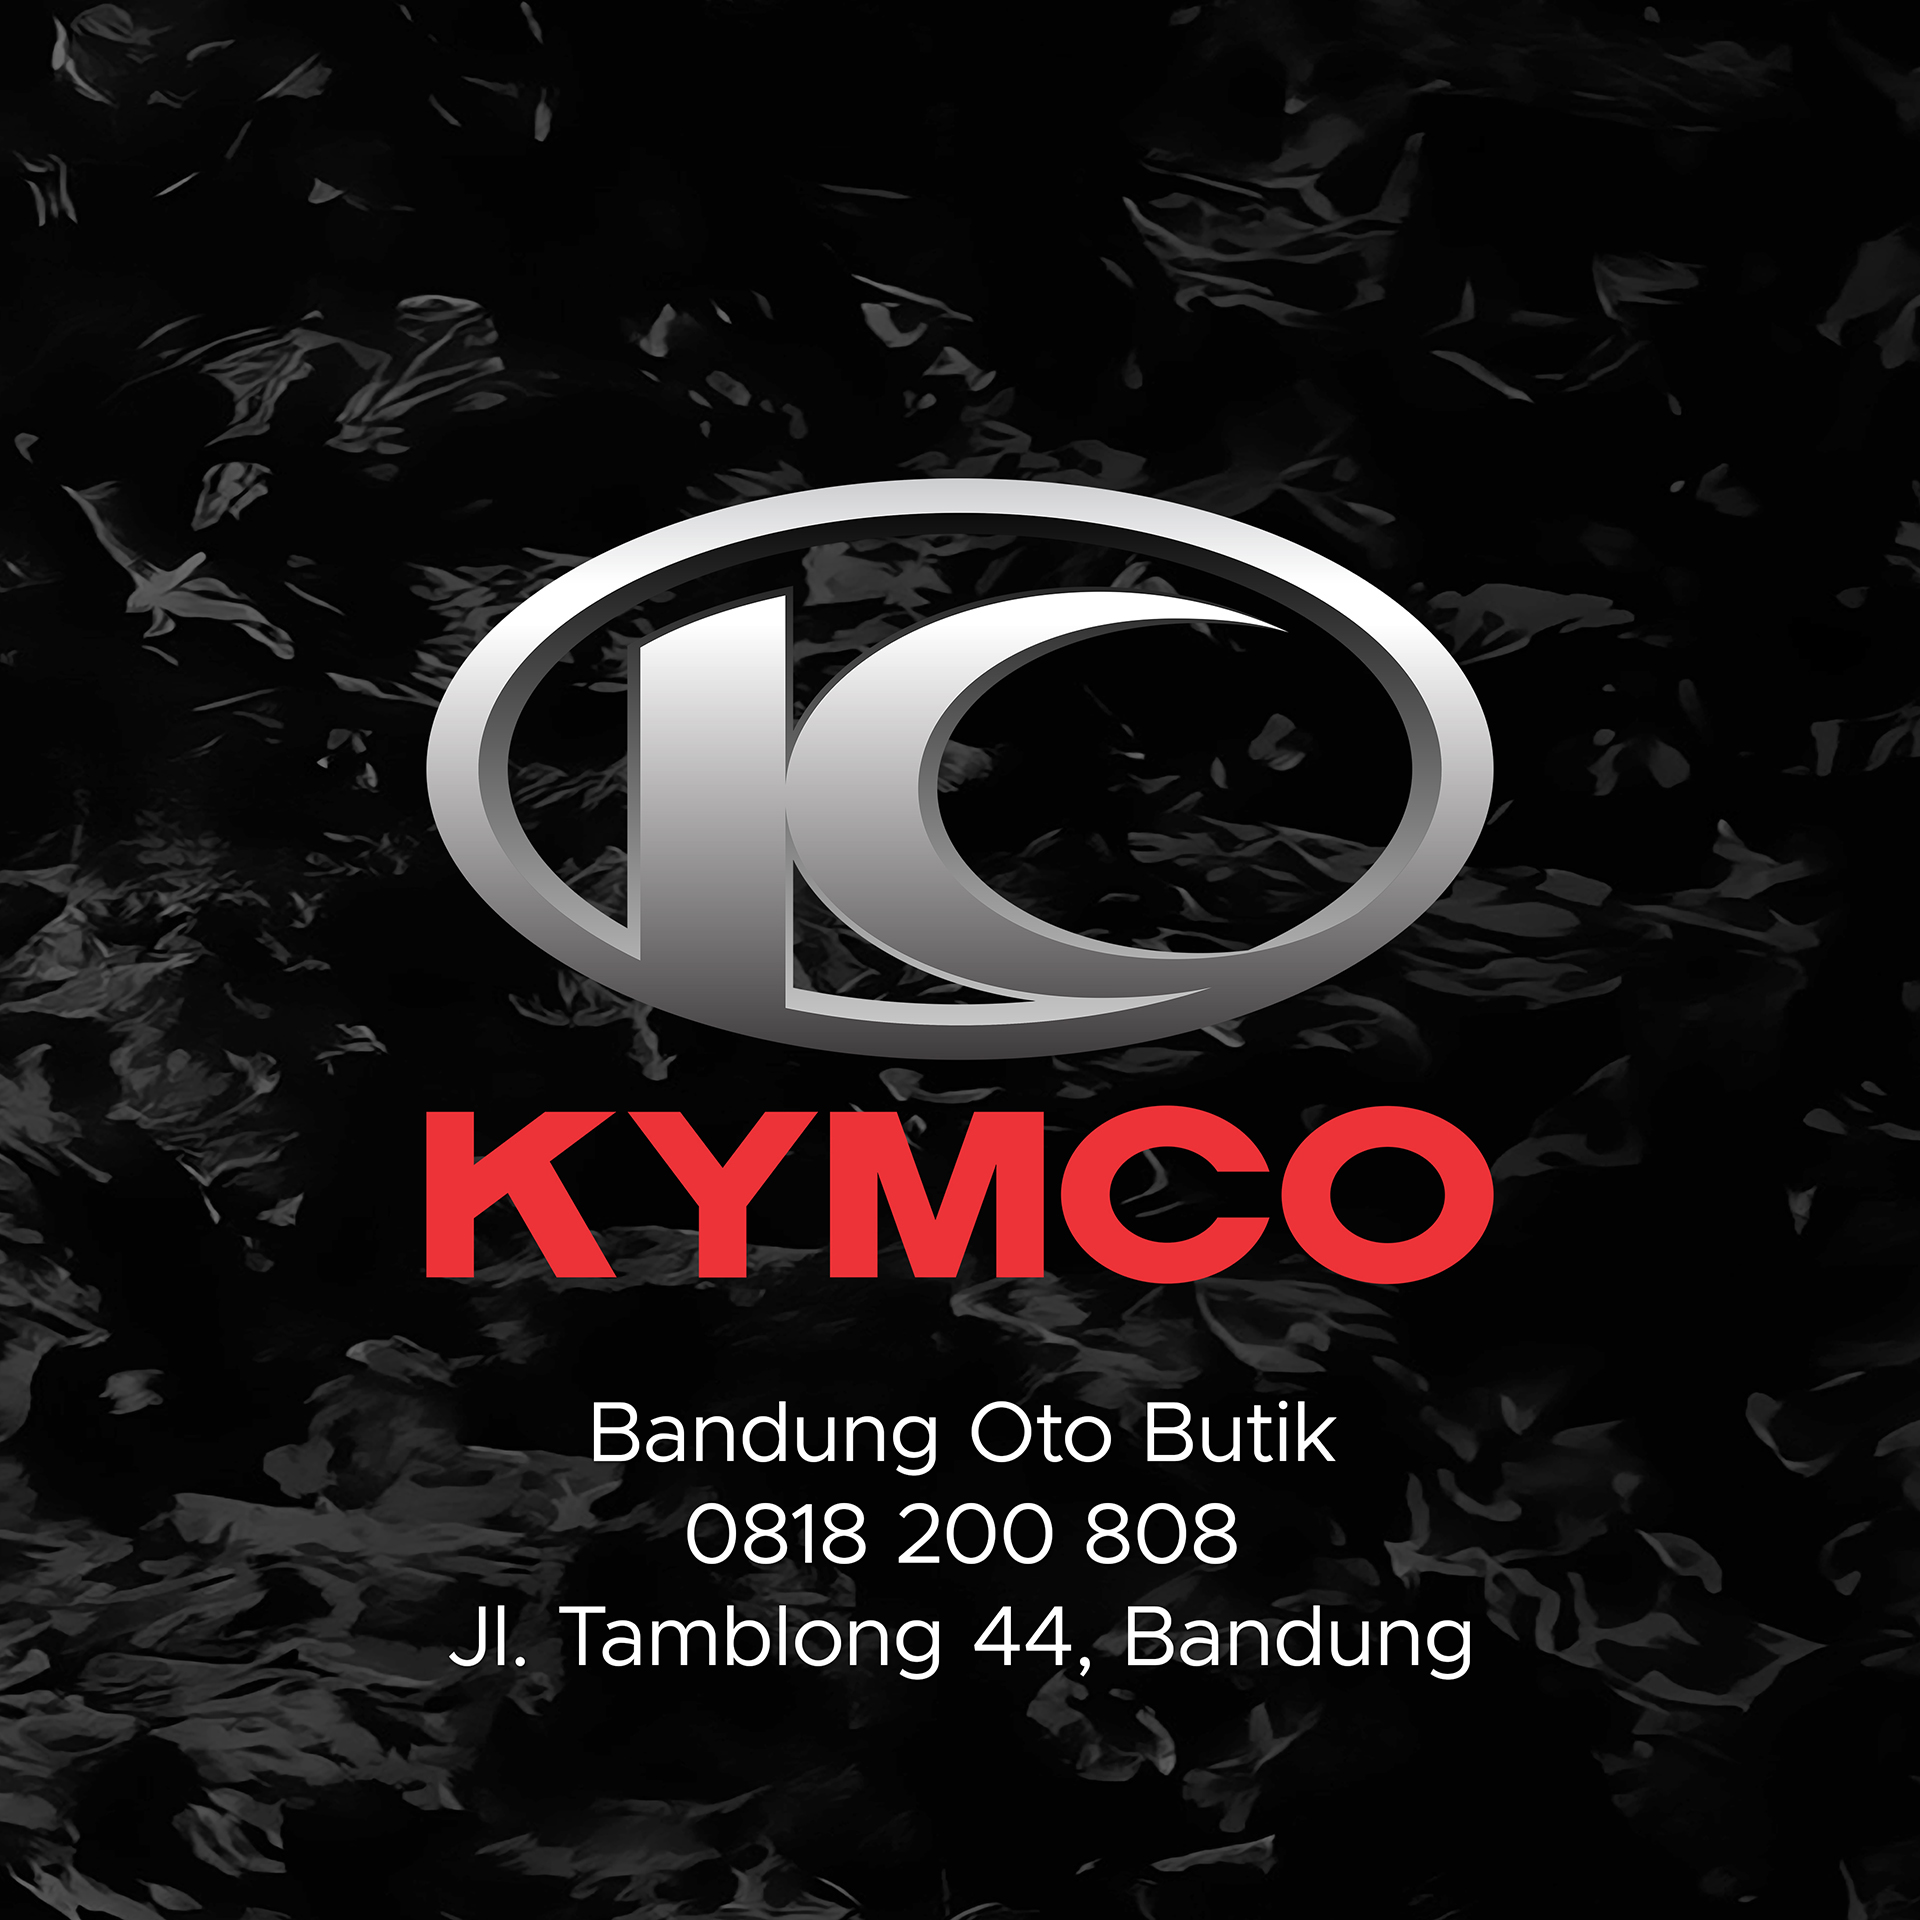 Kymco Jawa Barat - Bandung Oto Butik